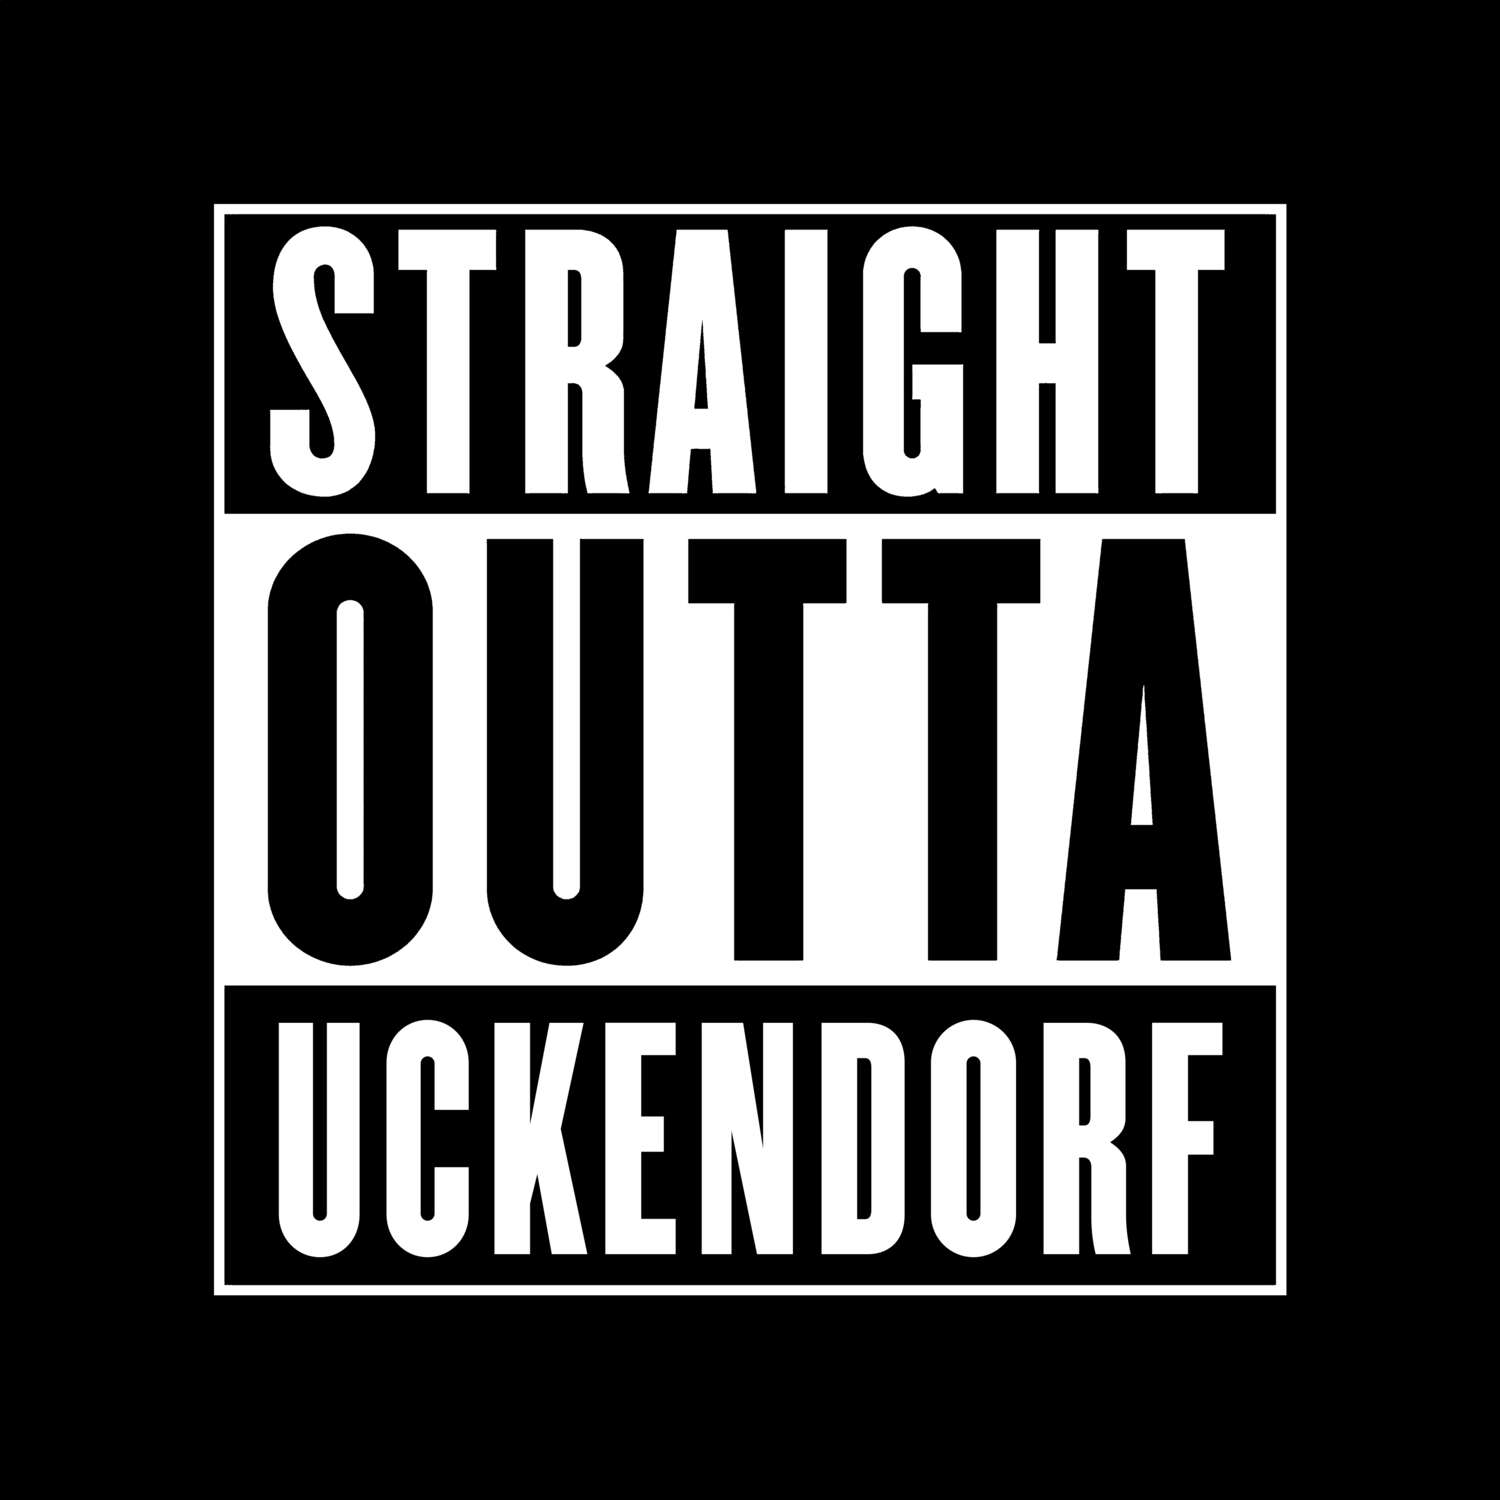 Uckendorf T-Shirt »Straight Outta«